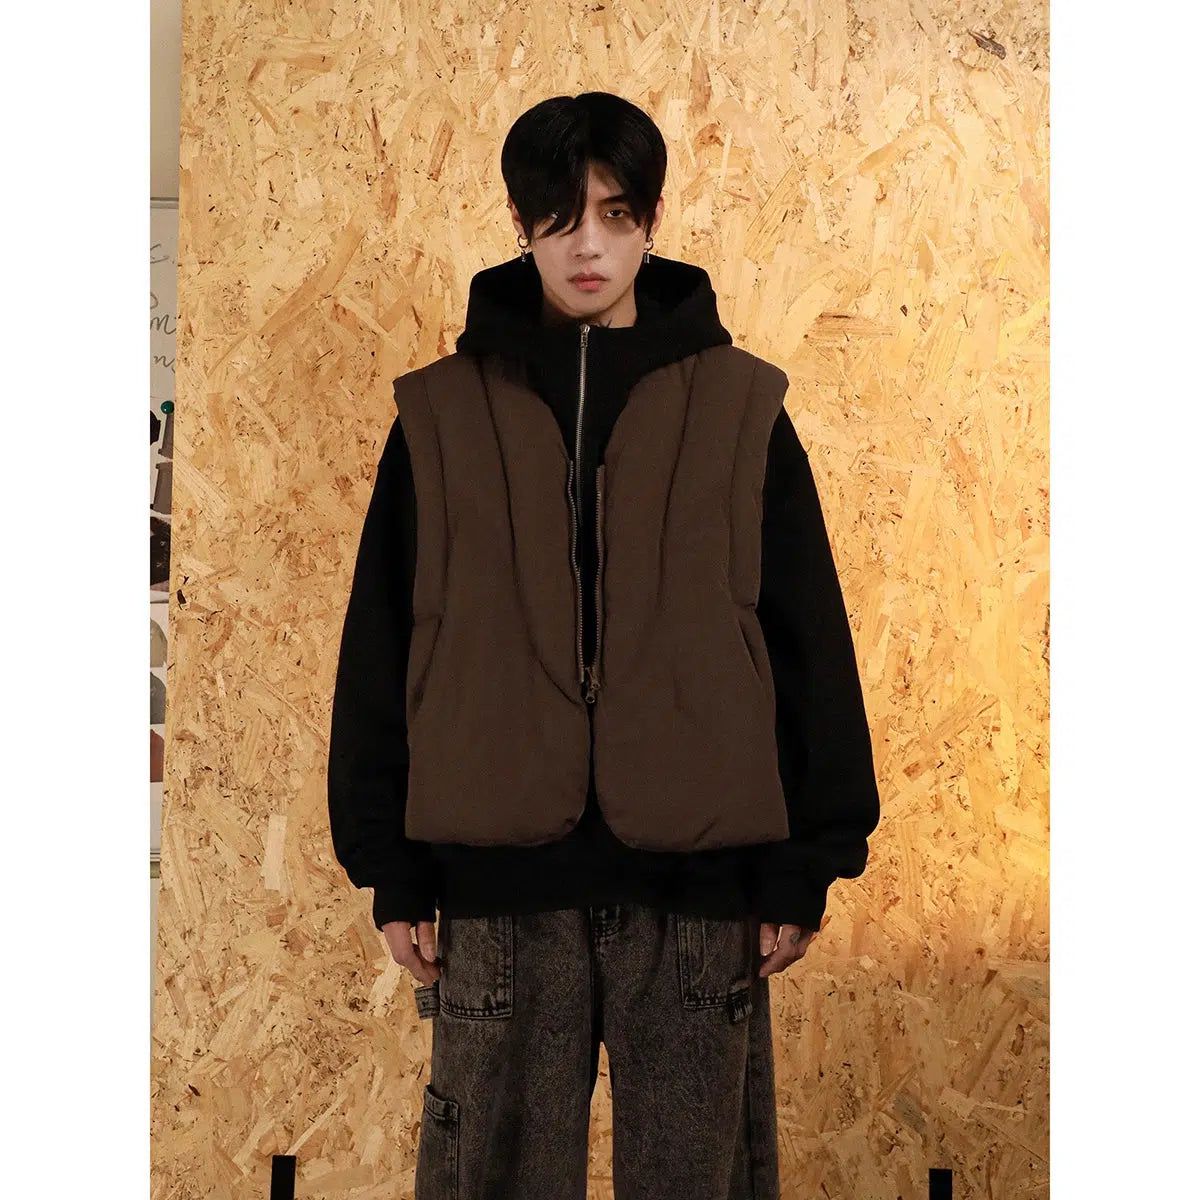 Irregular Style Puffer Vest Korean Street Fashion Vest By Mr Nearly Shop Online at OH Vault